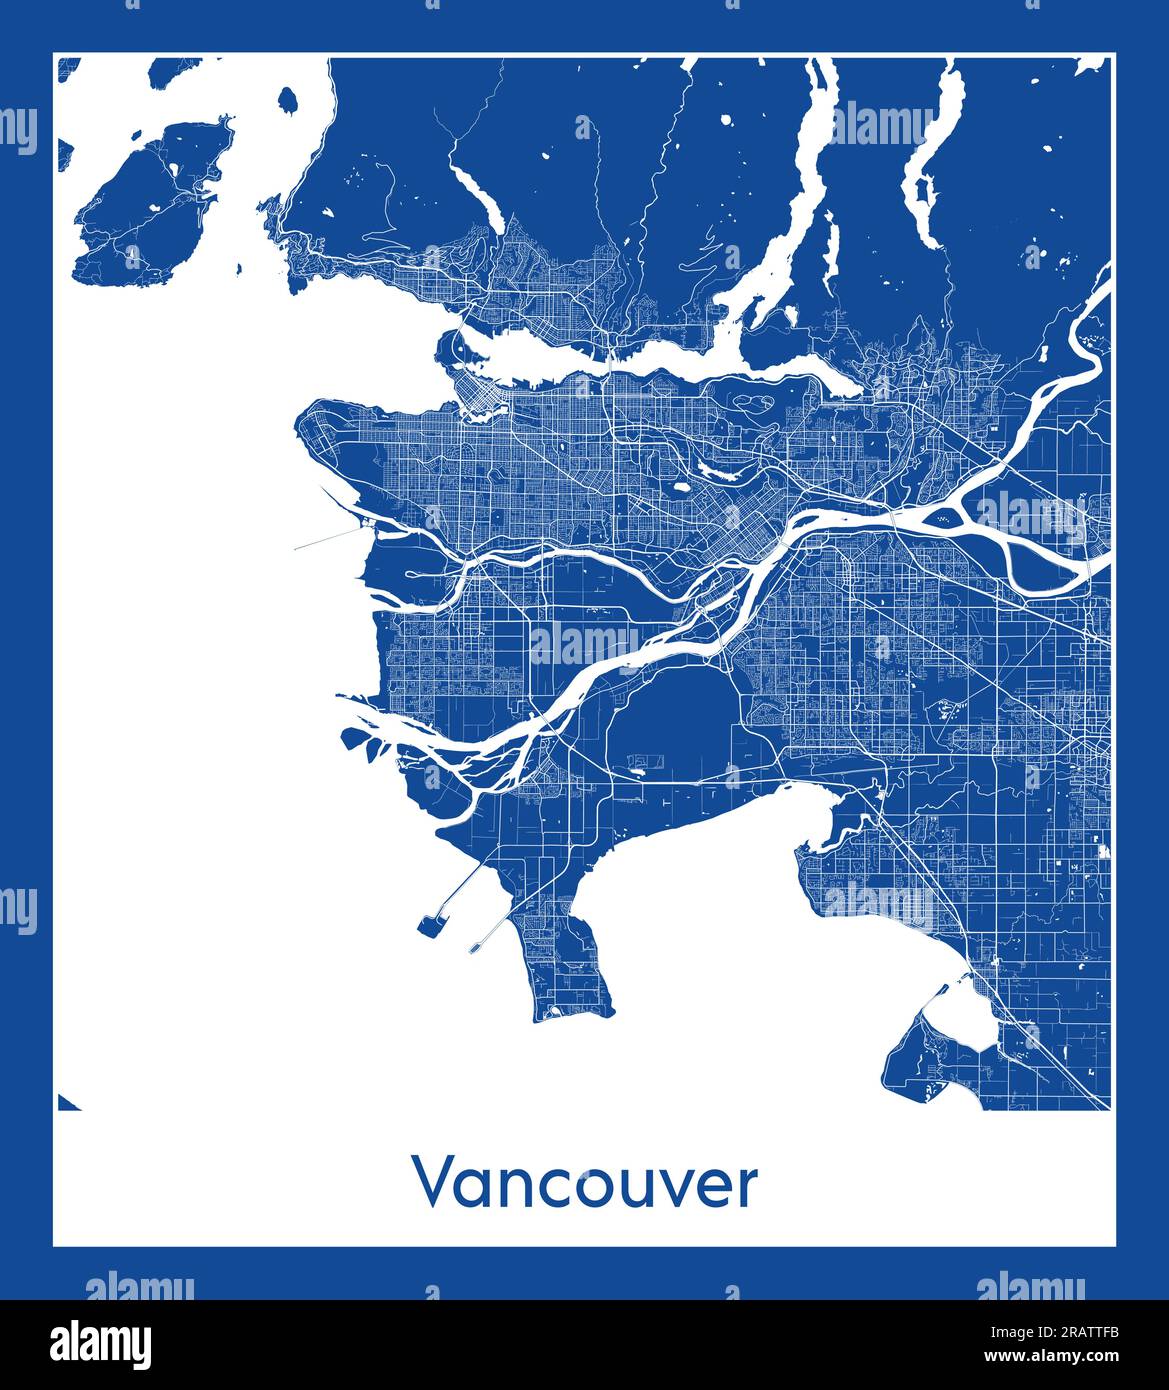 Vancouver Canada North America City map blue print vector illustration Stock Vector